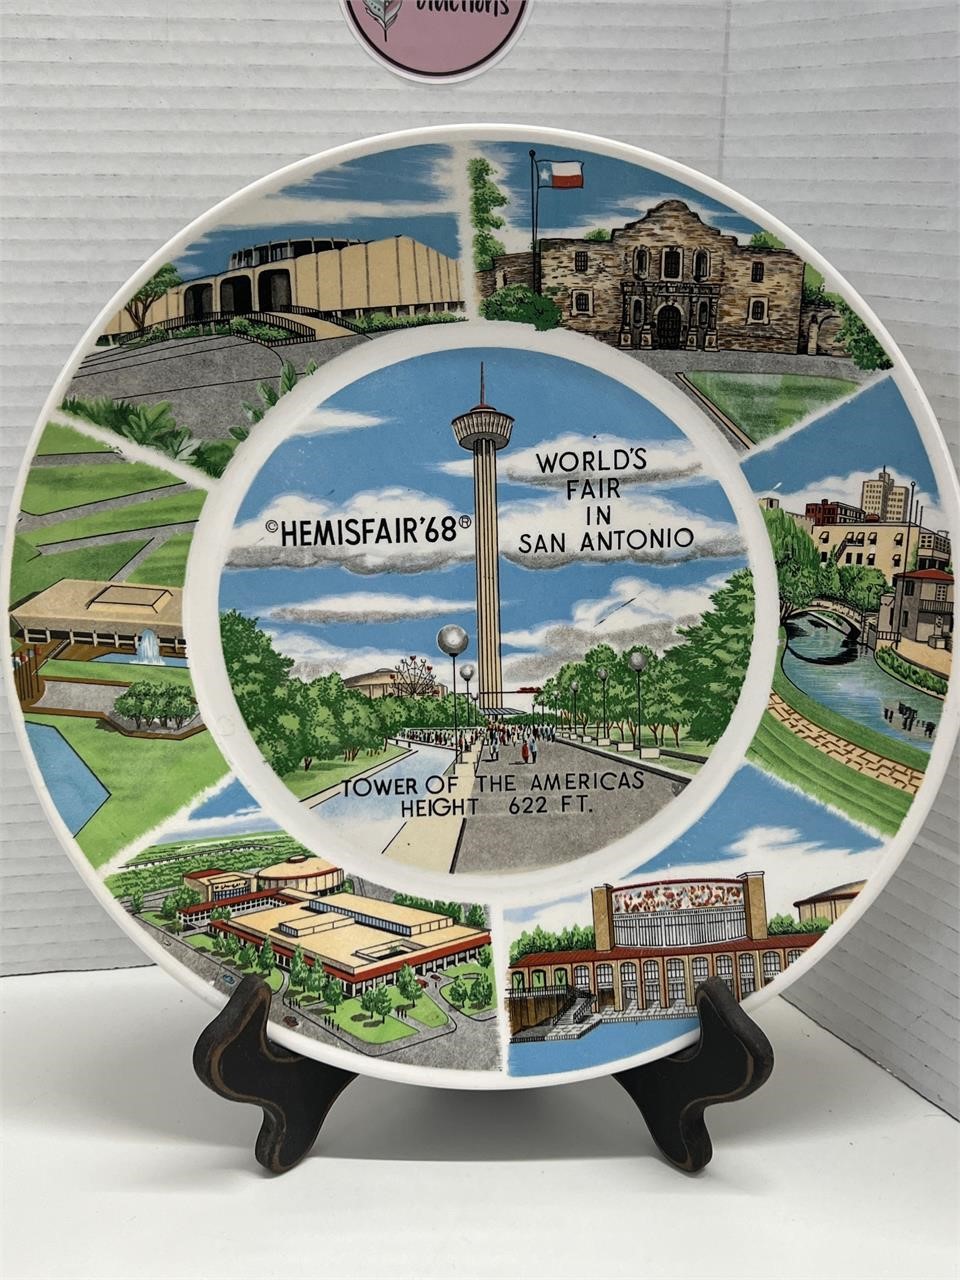 1968 World's Fair San Antonio Hemisfair Plate